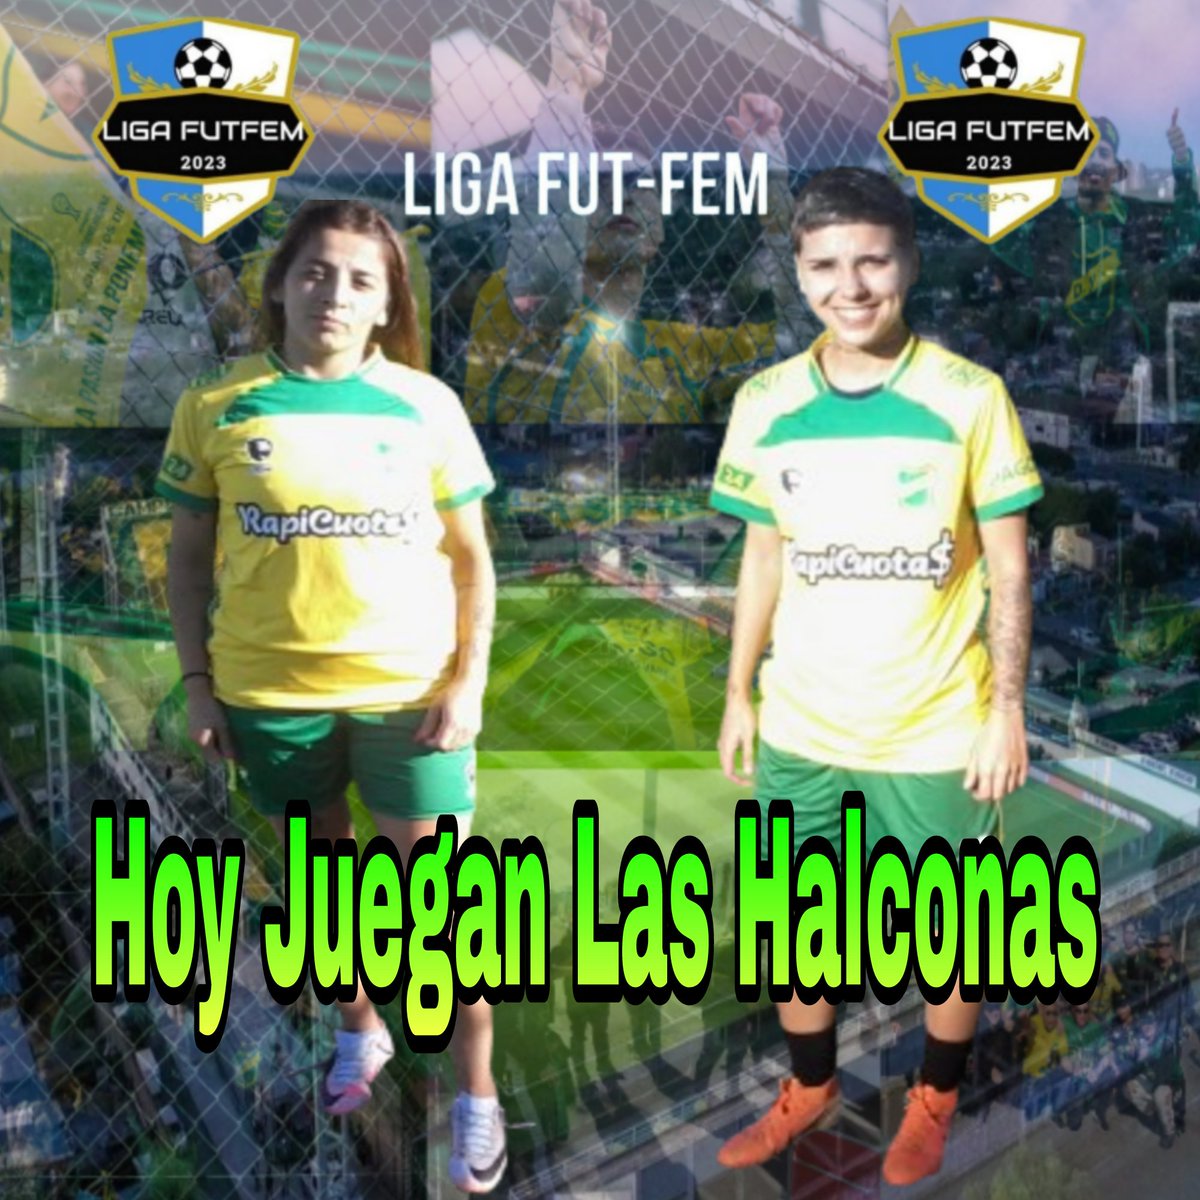 #FútbolFemenino

#HoyJueganLasHalconas 

🆚 @quilmesfemenino 
⏰ 12hs
🏟️ Alsina y Lora

#ElOrgulloDeSerDefensa💚💛💚 #DefensayJusticia💚💛💚 #vamosdefe🔰🦅 #somosDefensa #somosVarela #LigaFUTFEM